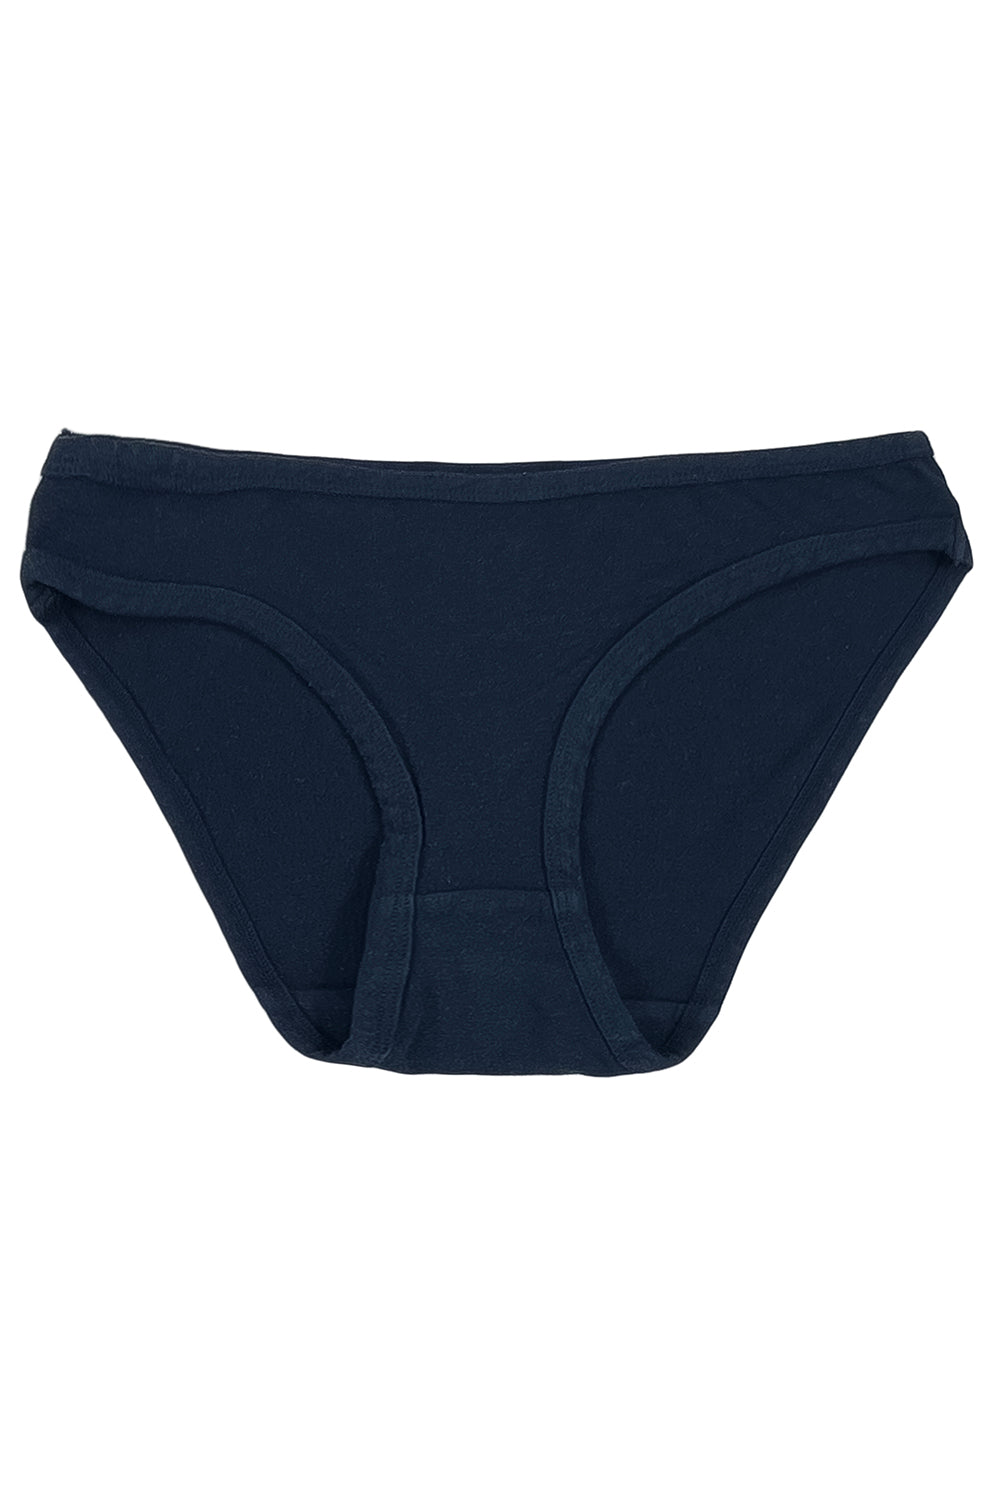 Sustainable Cotton Underwear Navy Blue Low Rise Bikini Style Organic Cotton  